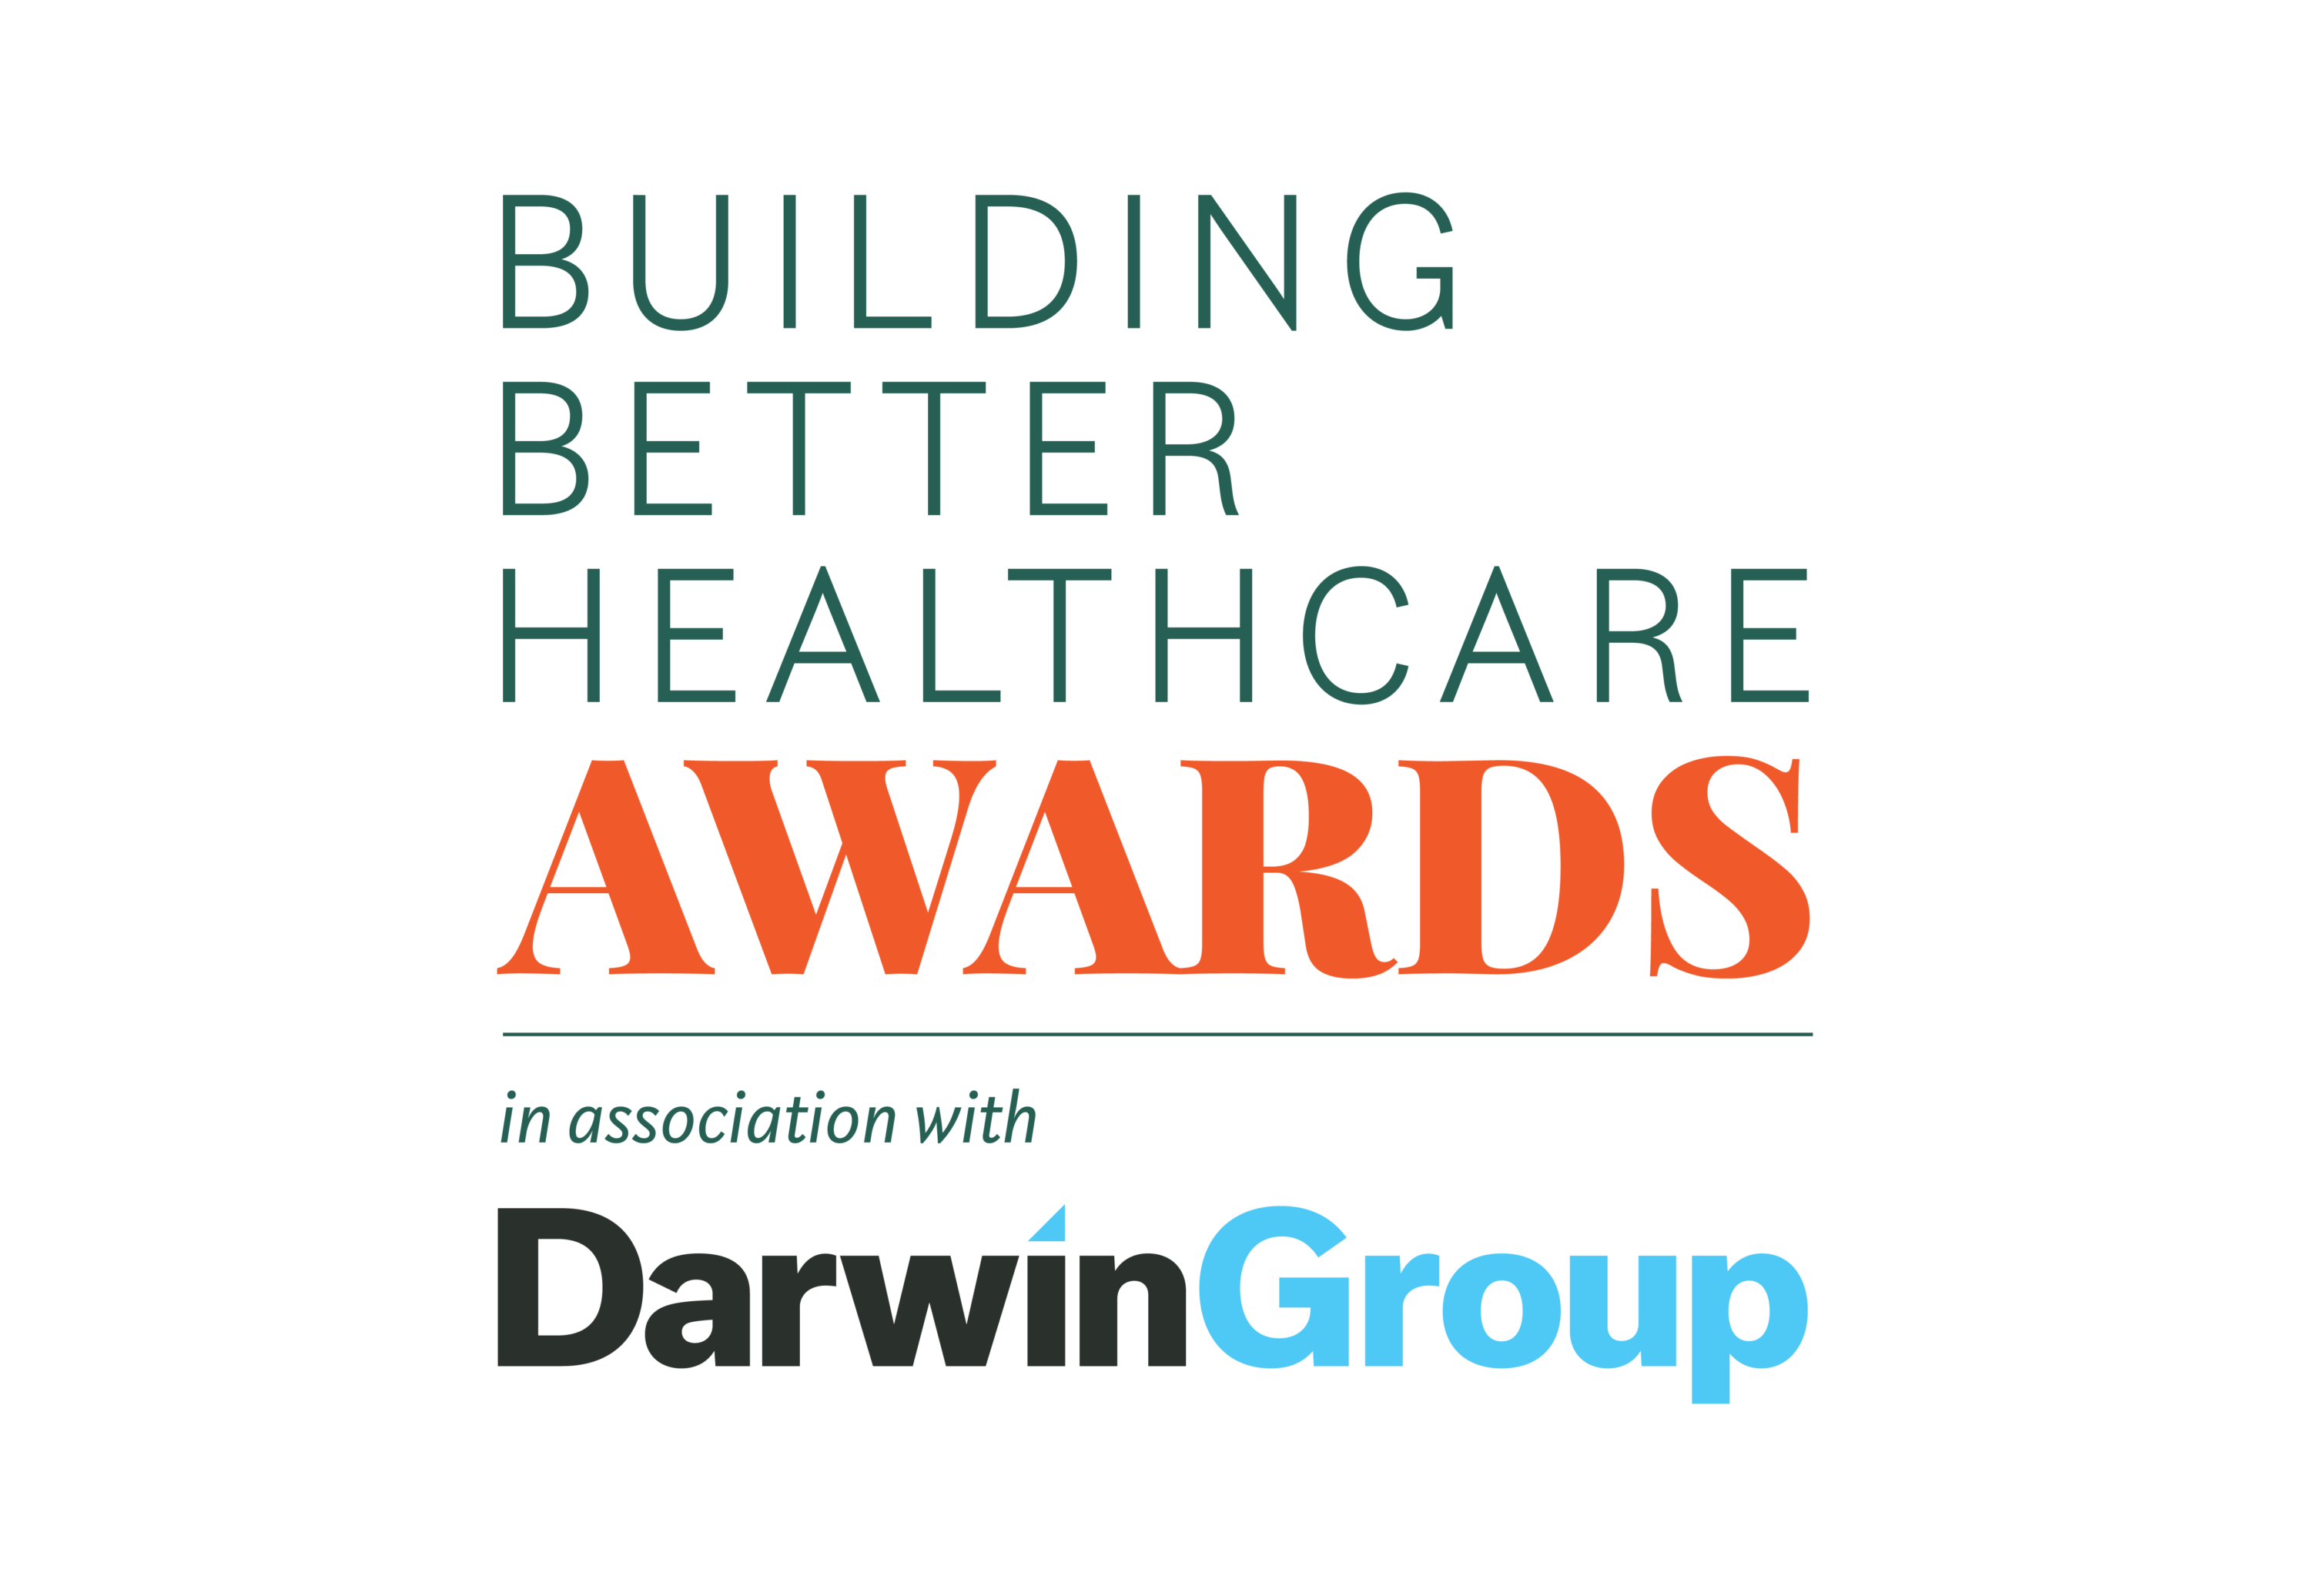 Building Better Healthcare Awards logo, incorporating the Darwin Group logo